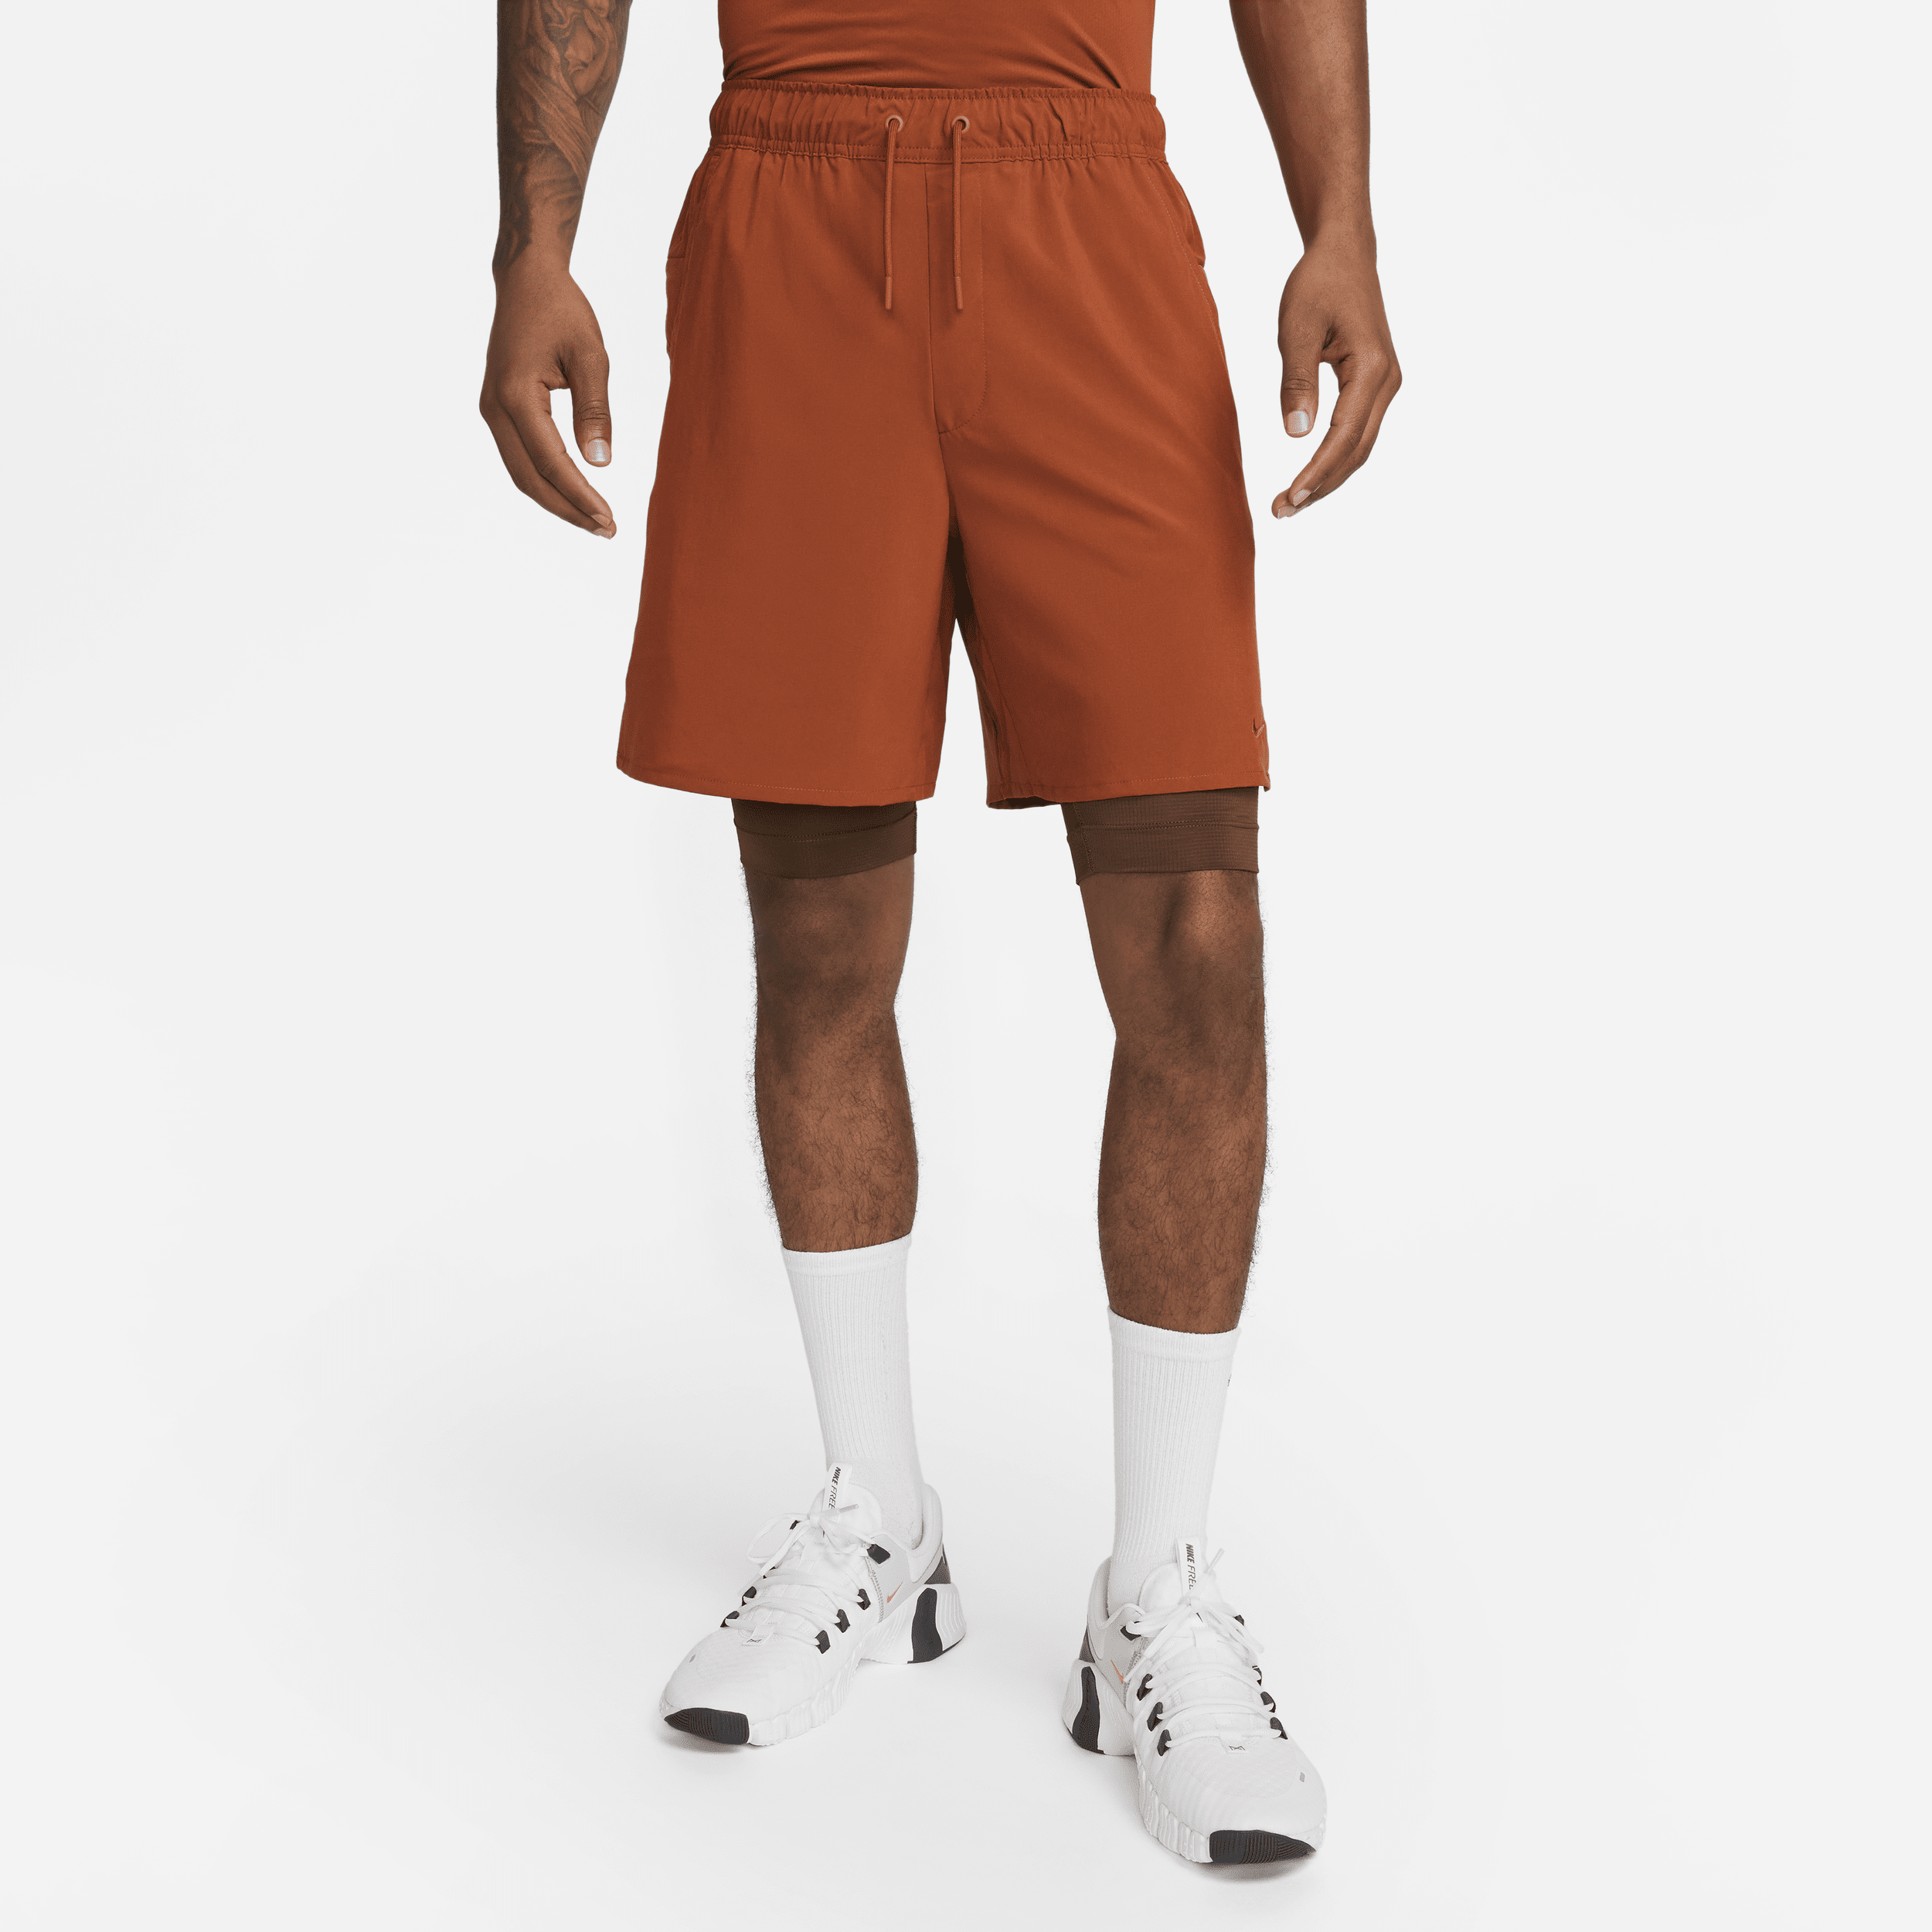 Nike Elite Gym Shorts- Red/Orange